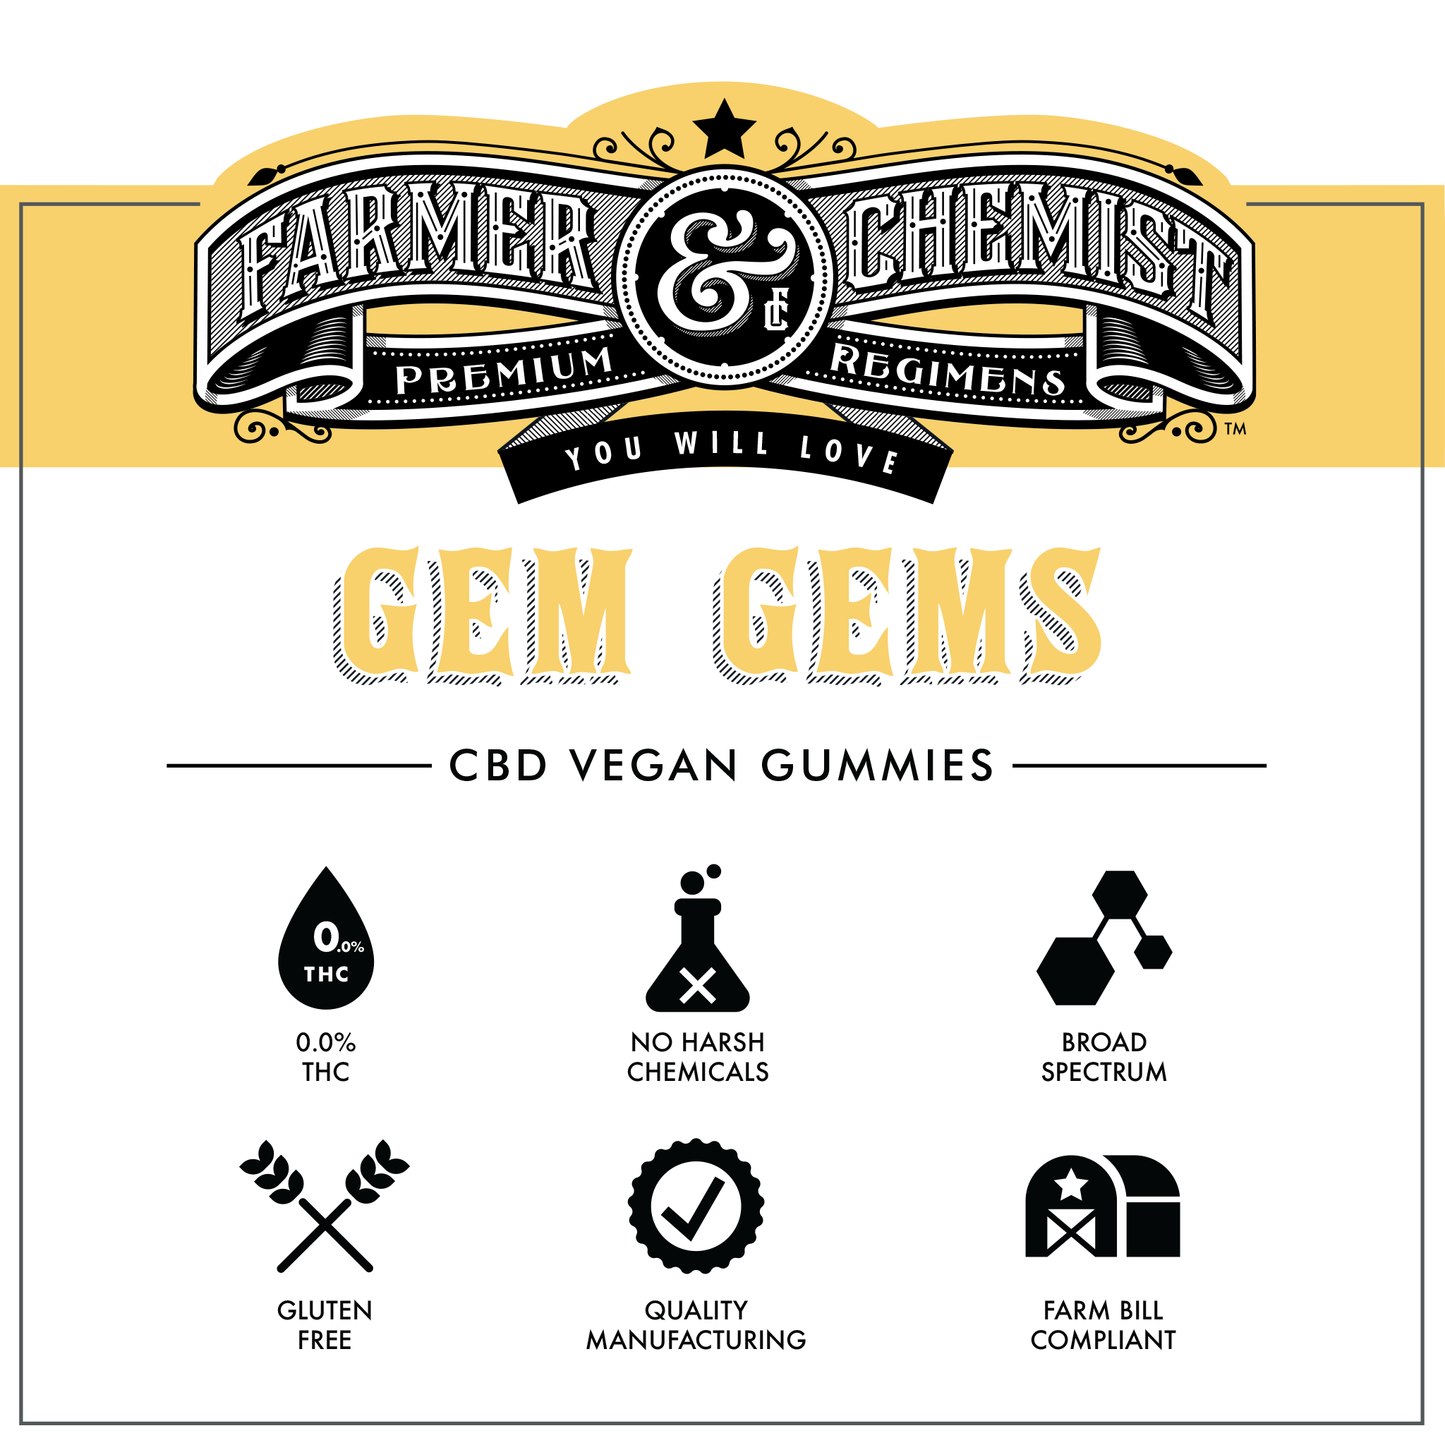 GEM GEMS - 24ct 25mg CBD / 5mg CBN Blueberry Lemon Flavor (Case pack of 4)